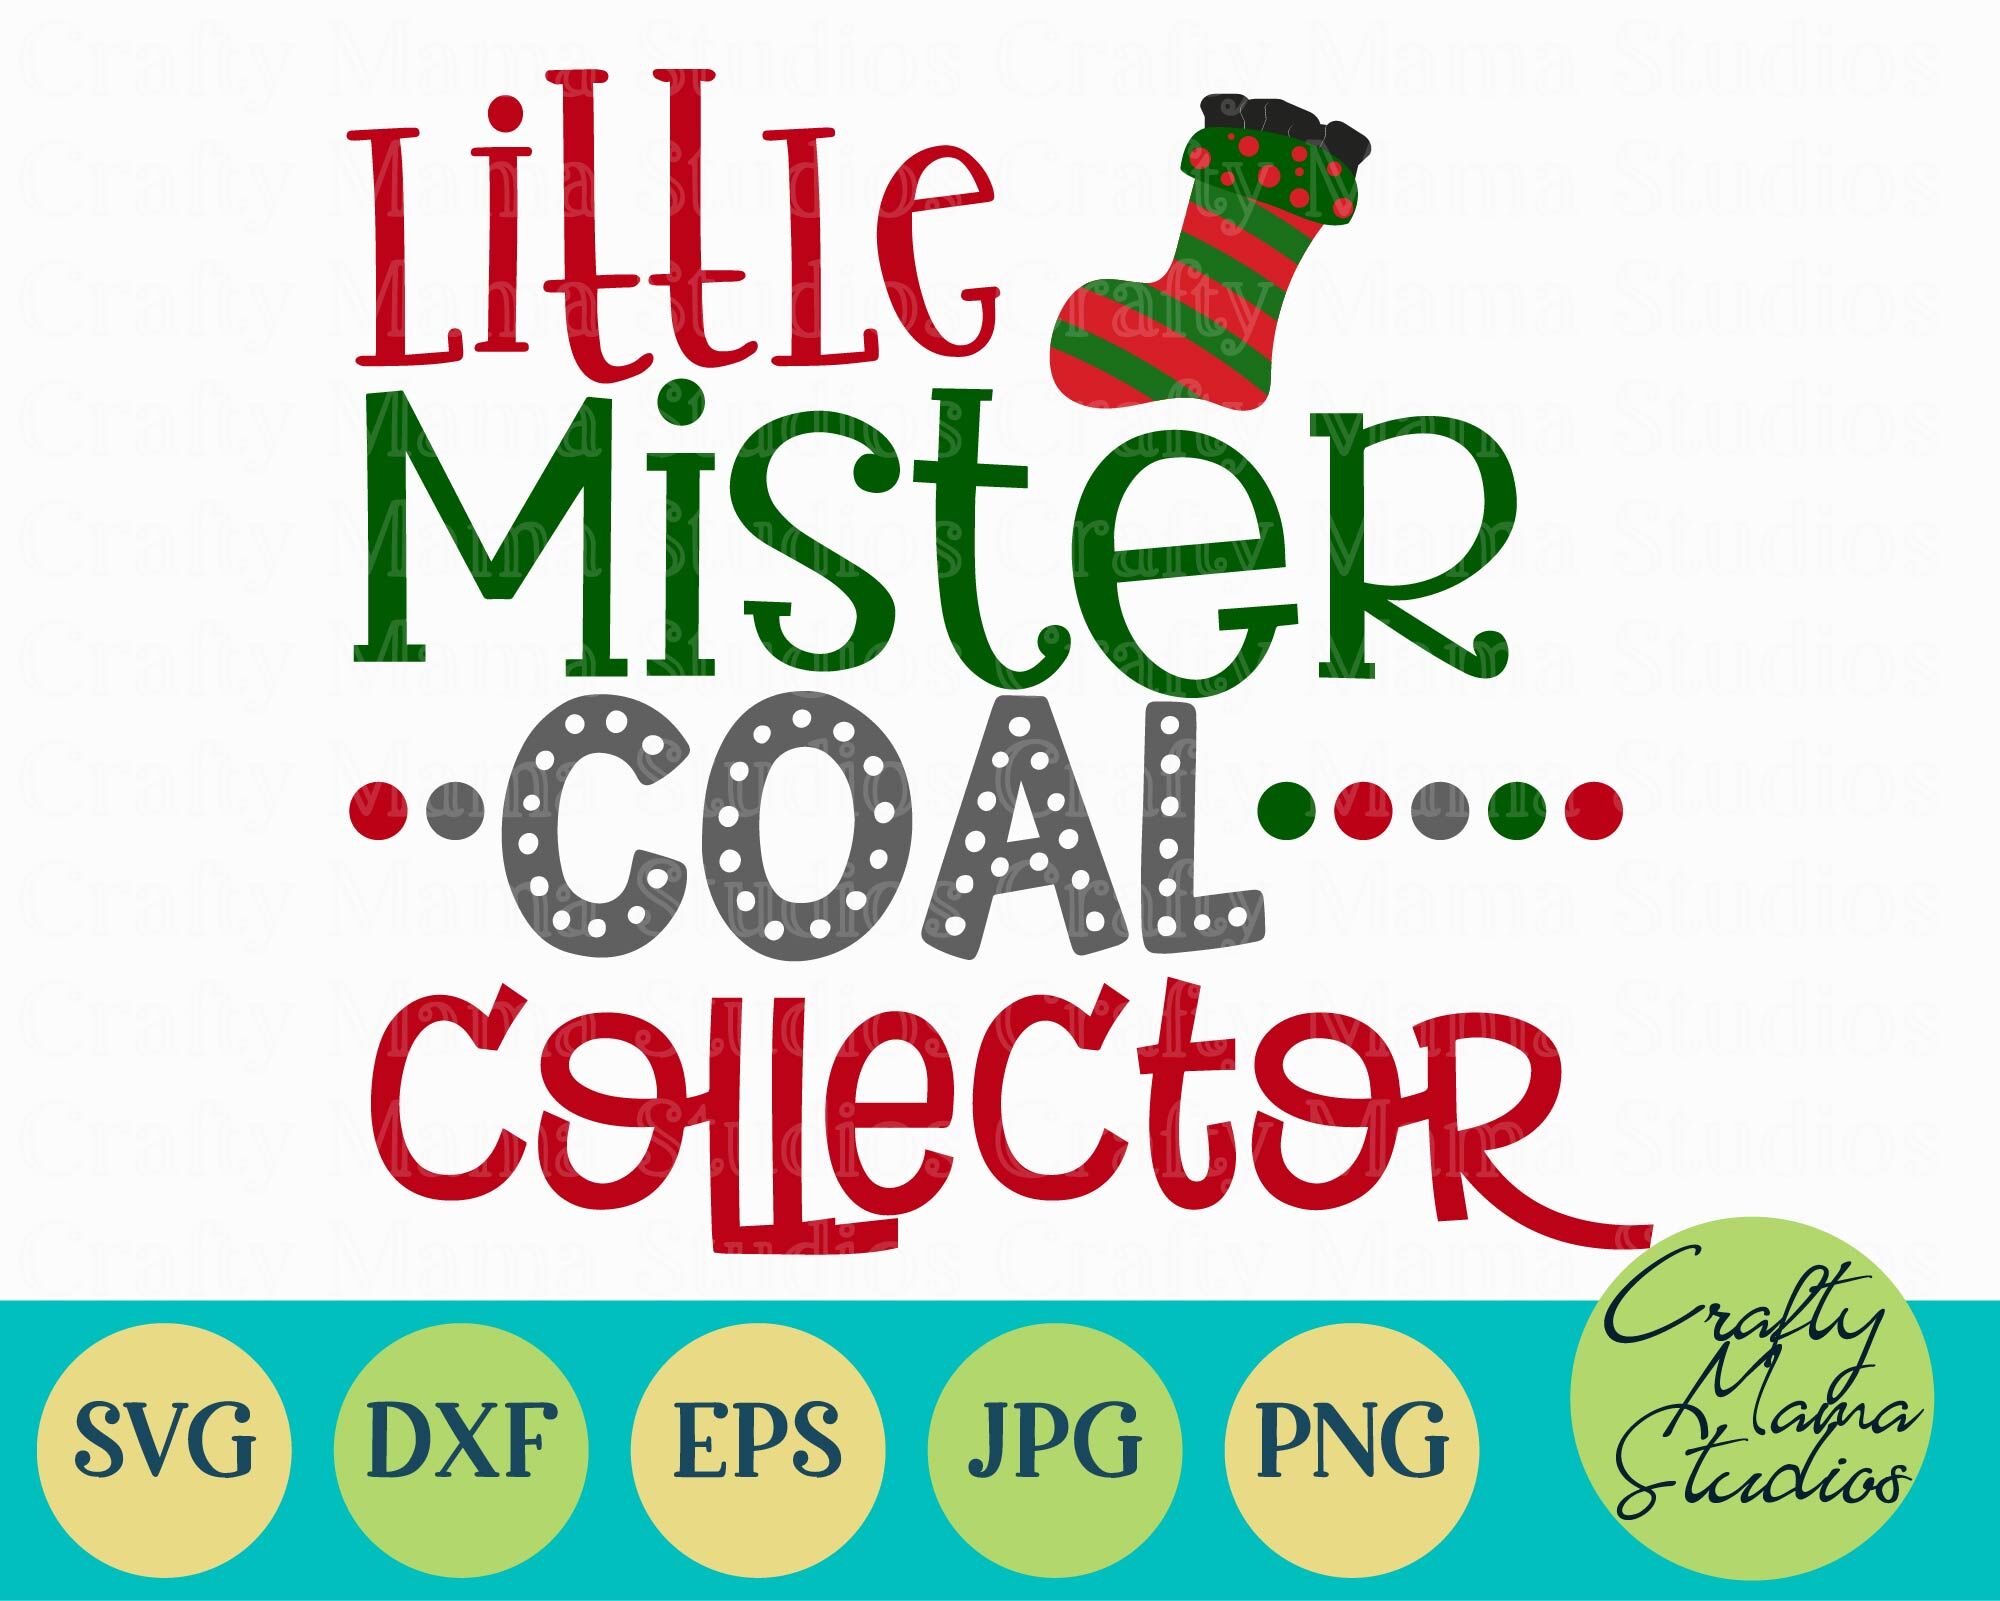 Christmas Svg Little Mister Coal Collector Kid S Christmas By Crafty Mama Studios Thehungryjpeg Com